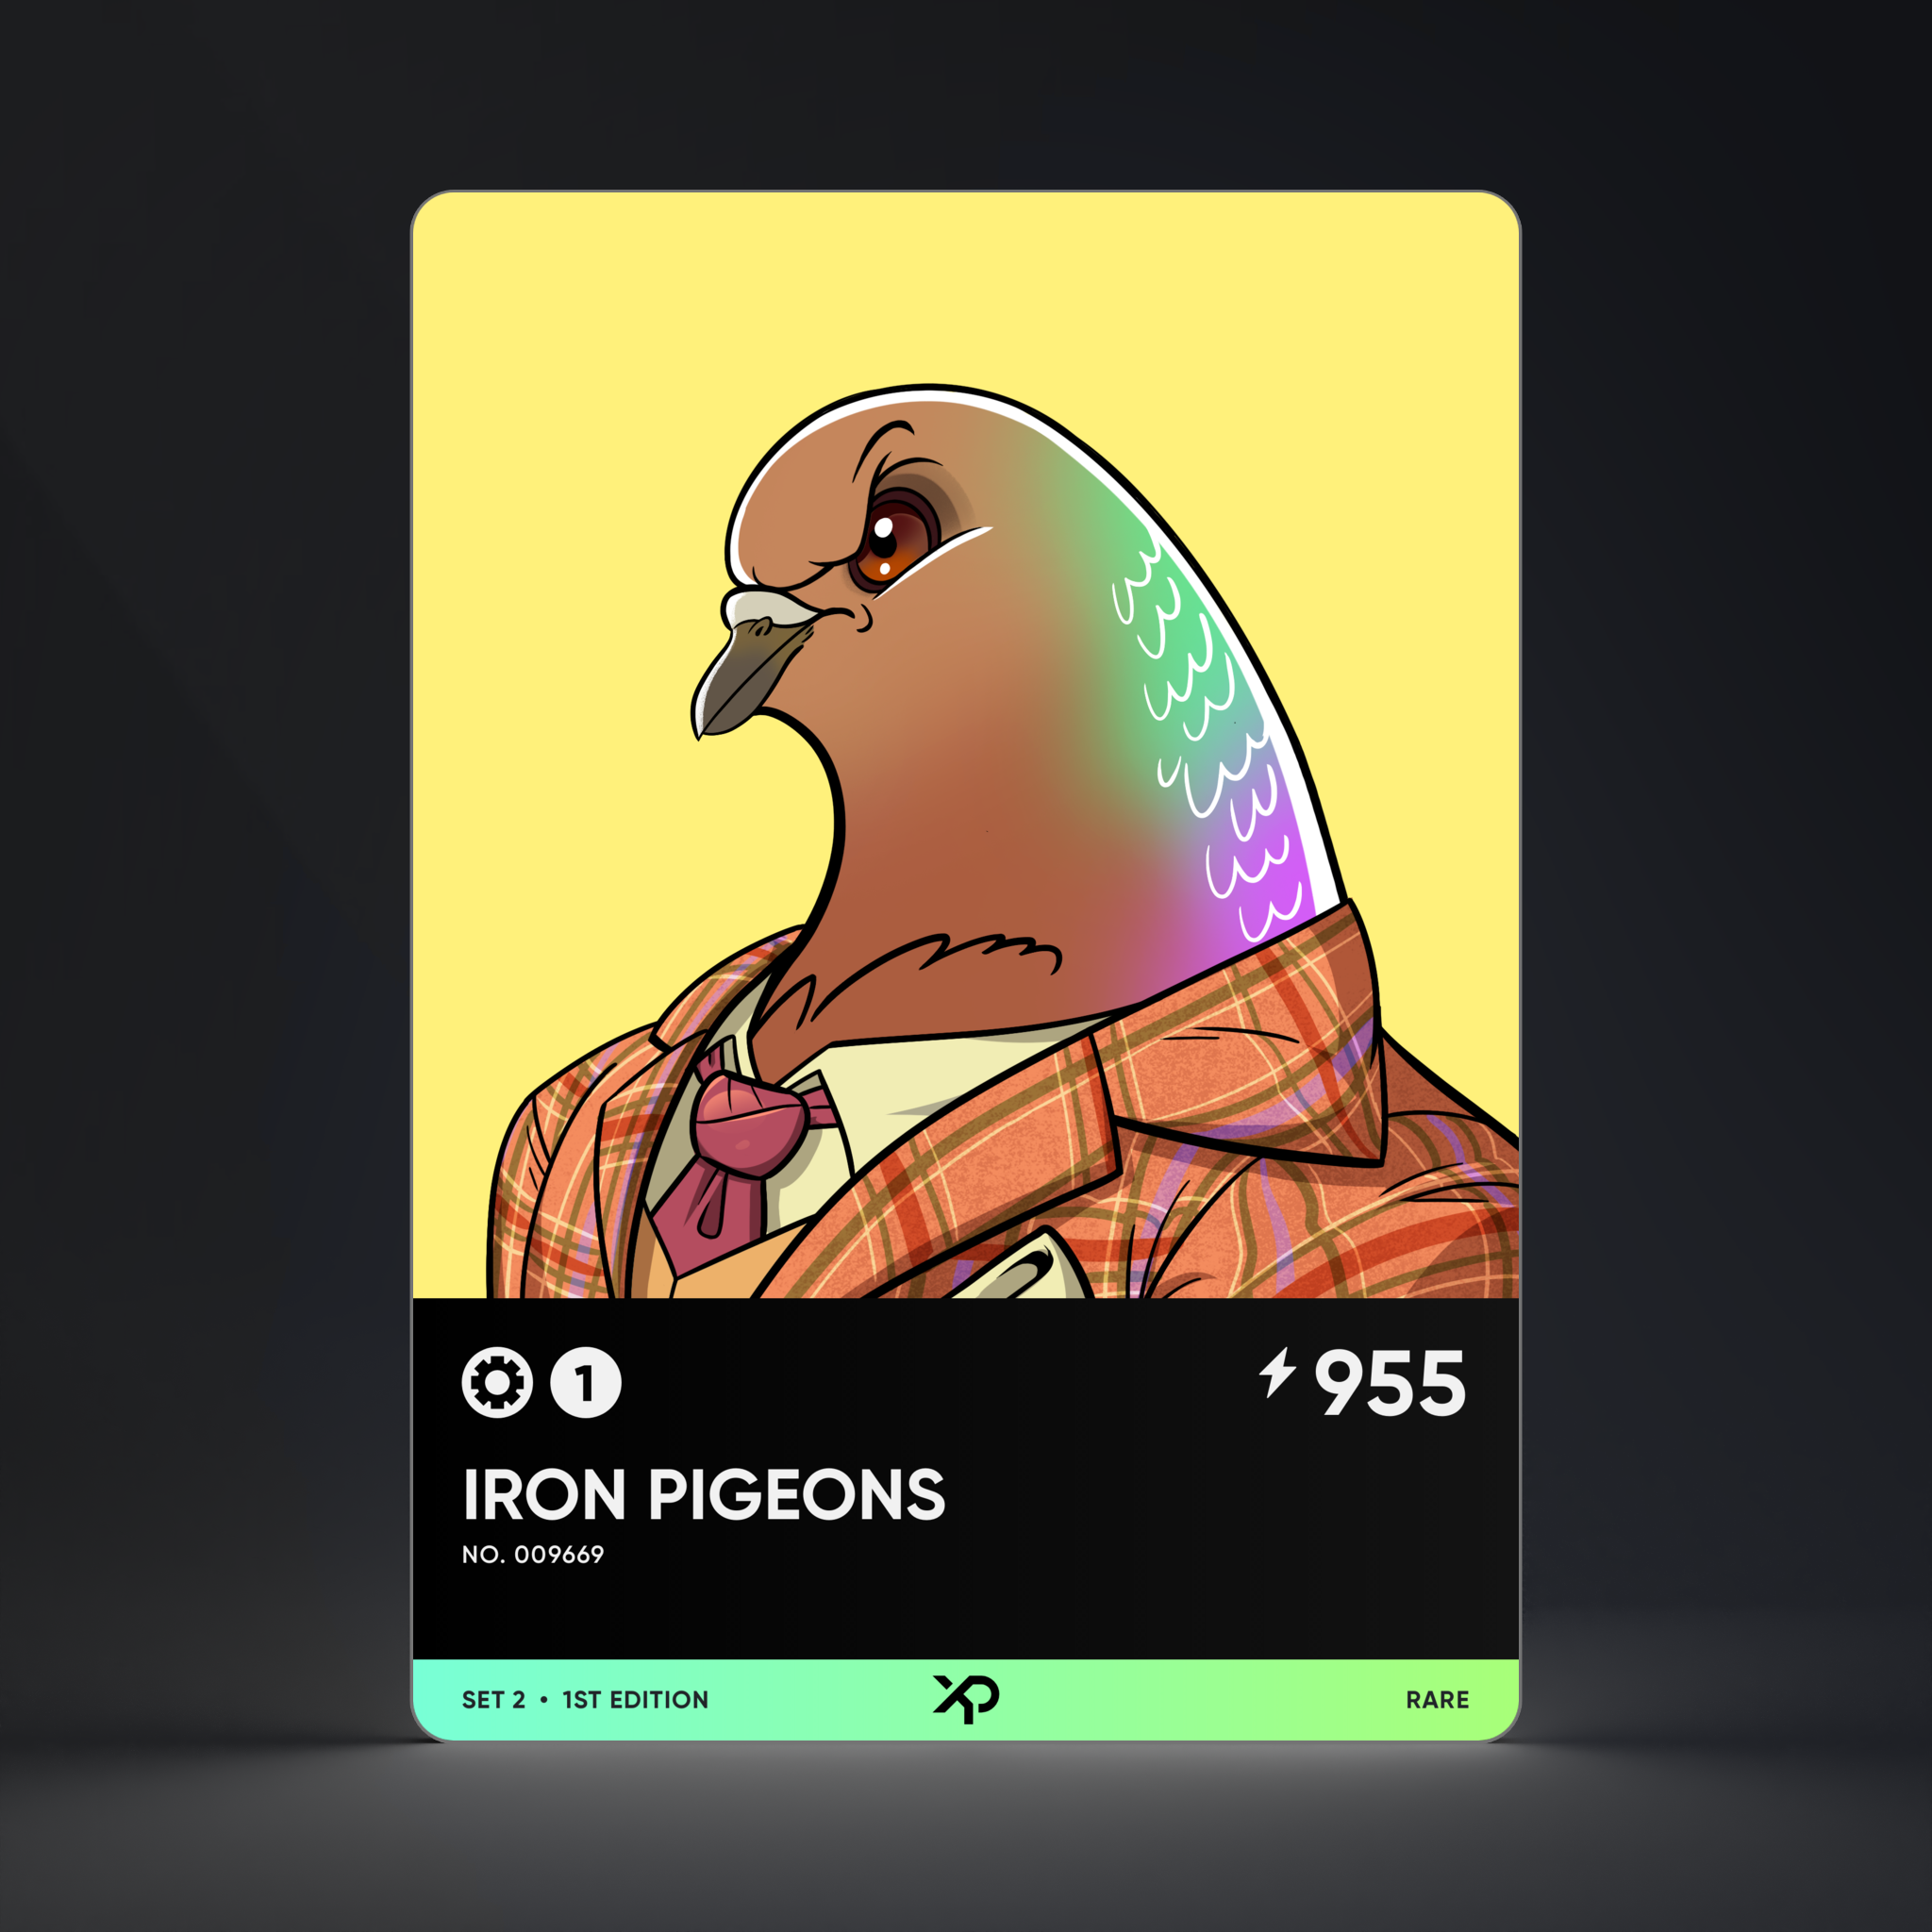 Iron Pigeon #9669 1st Edition